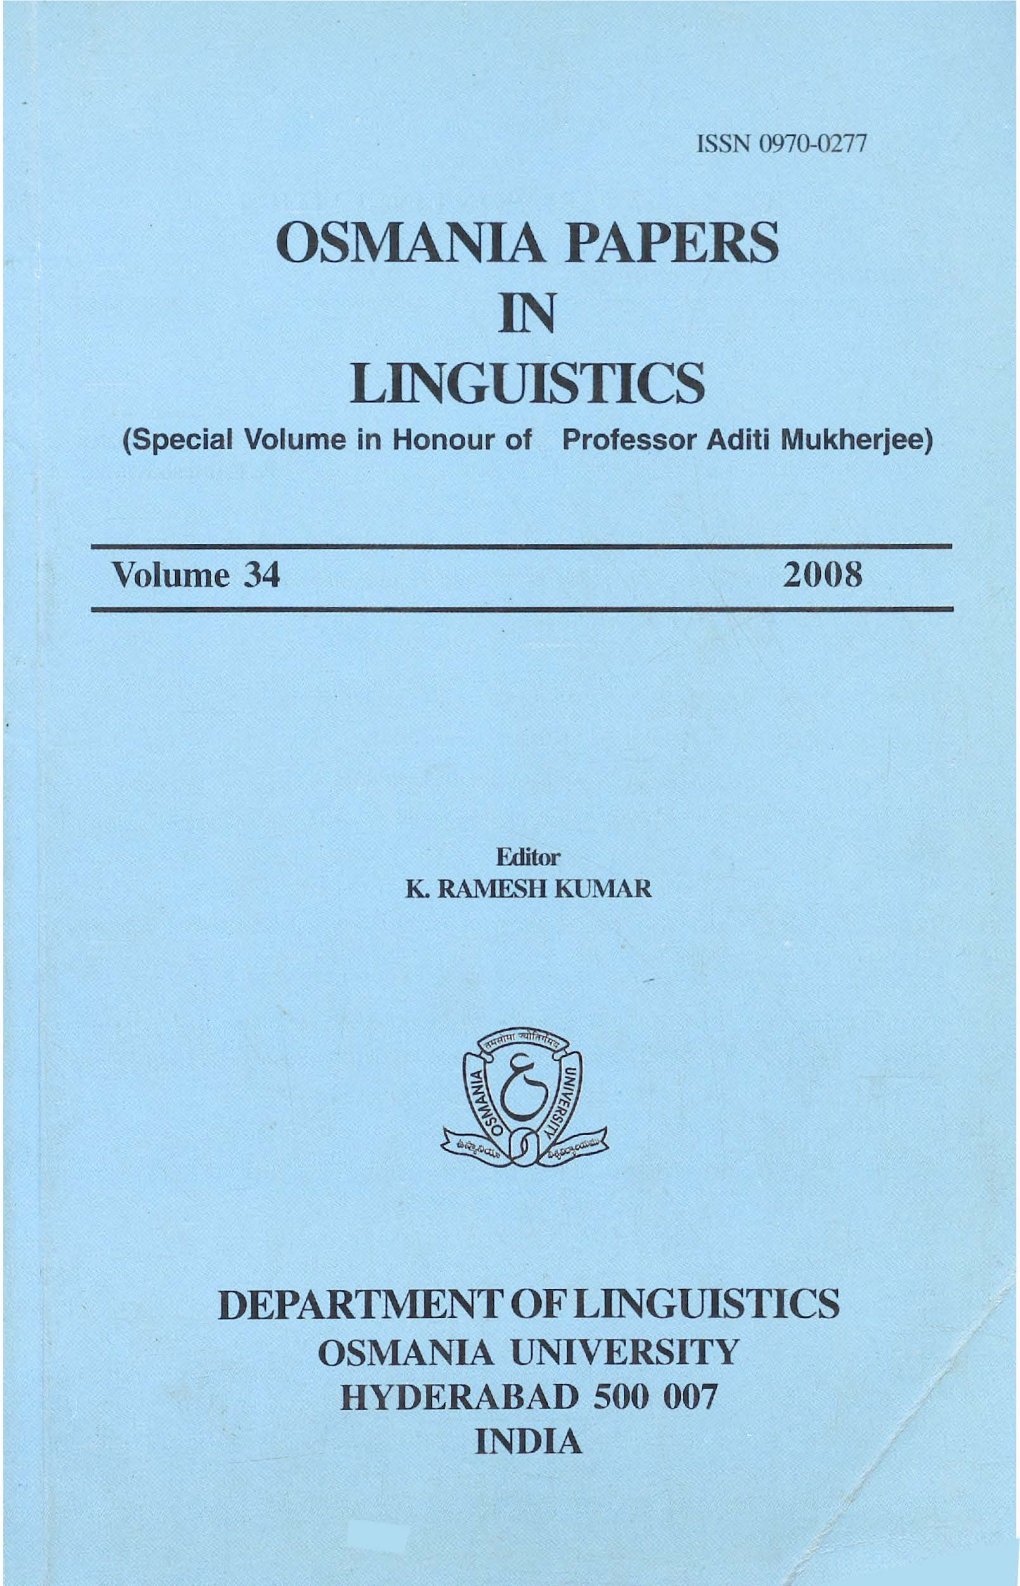 OSMANIA PAPERS in LINGUISTICS (Special Volume in Honour of Professor Aditi Mukherjee)